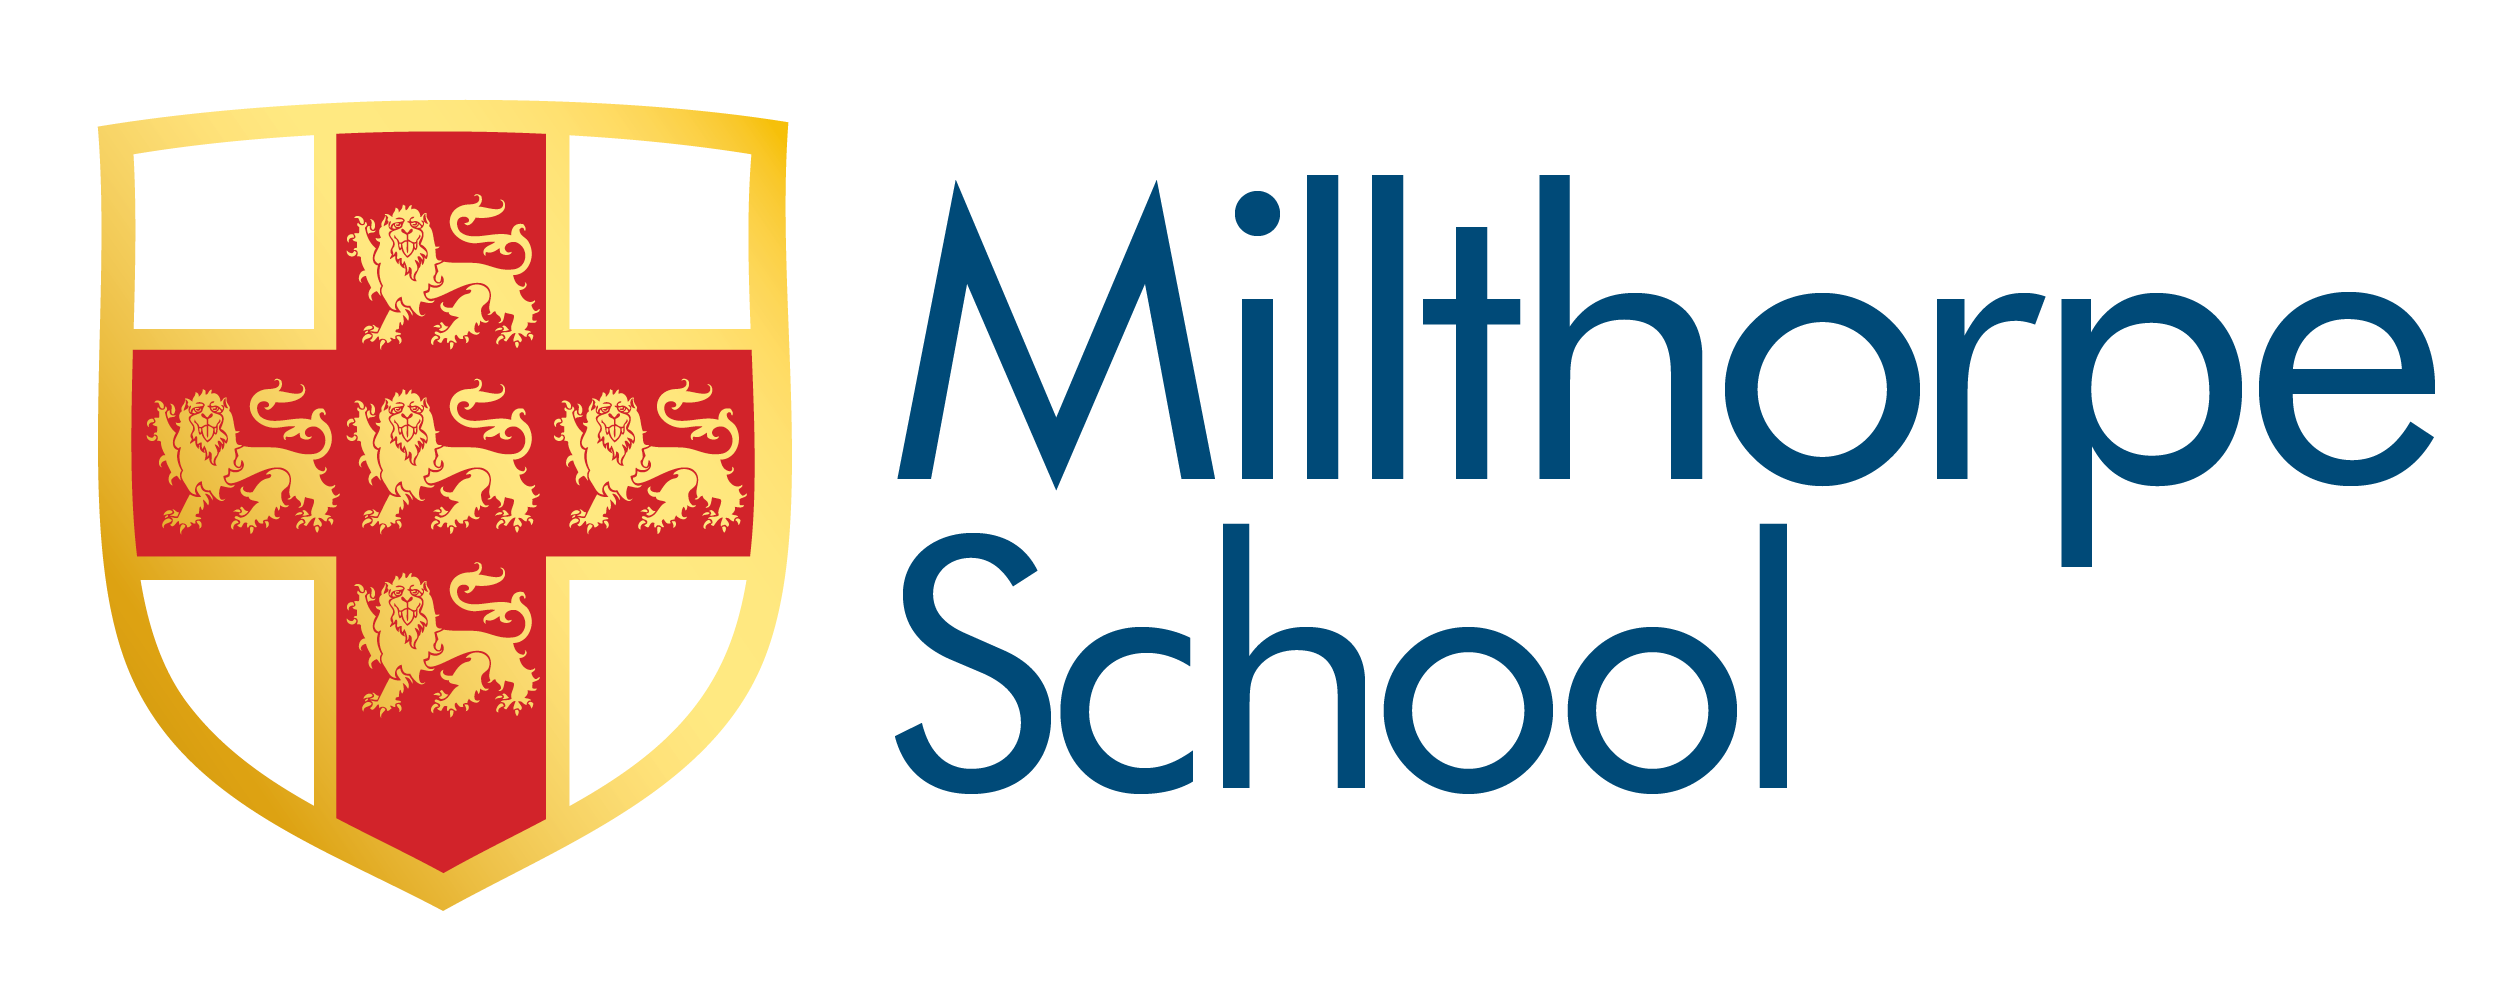 Millthorpe School logo